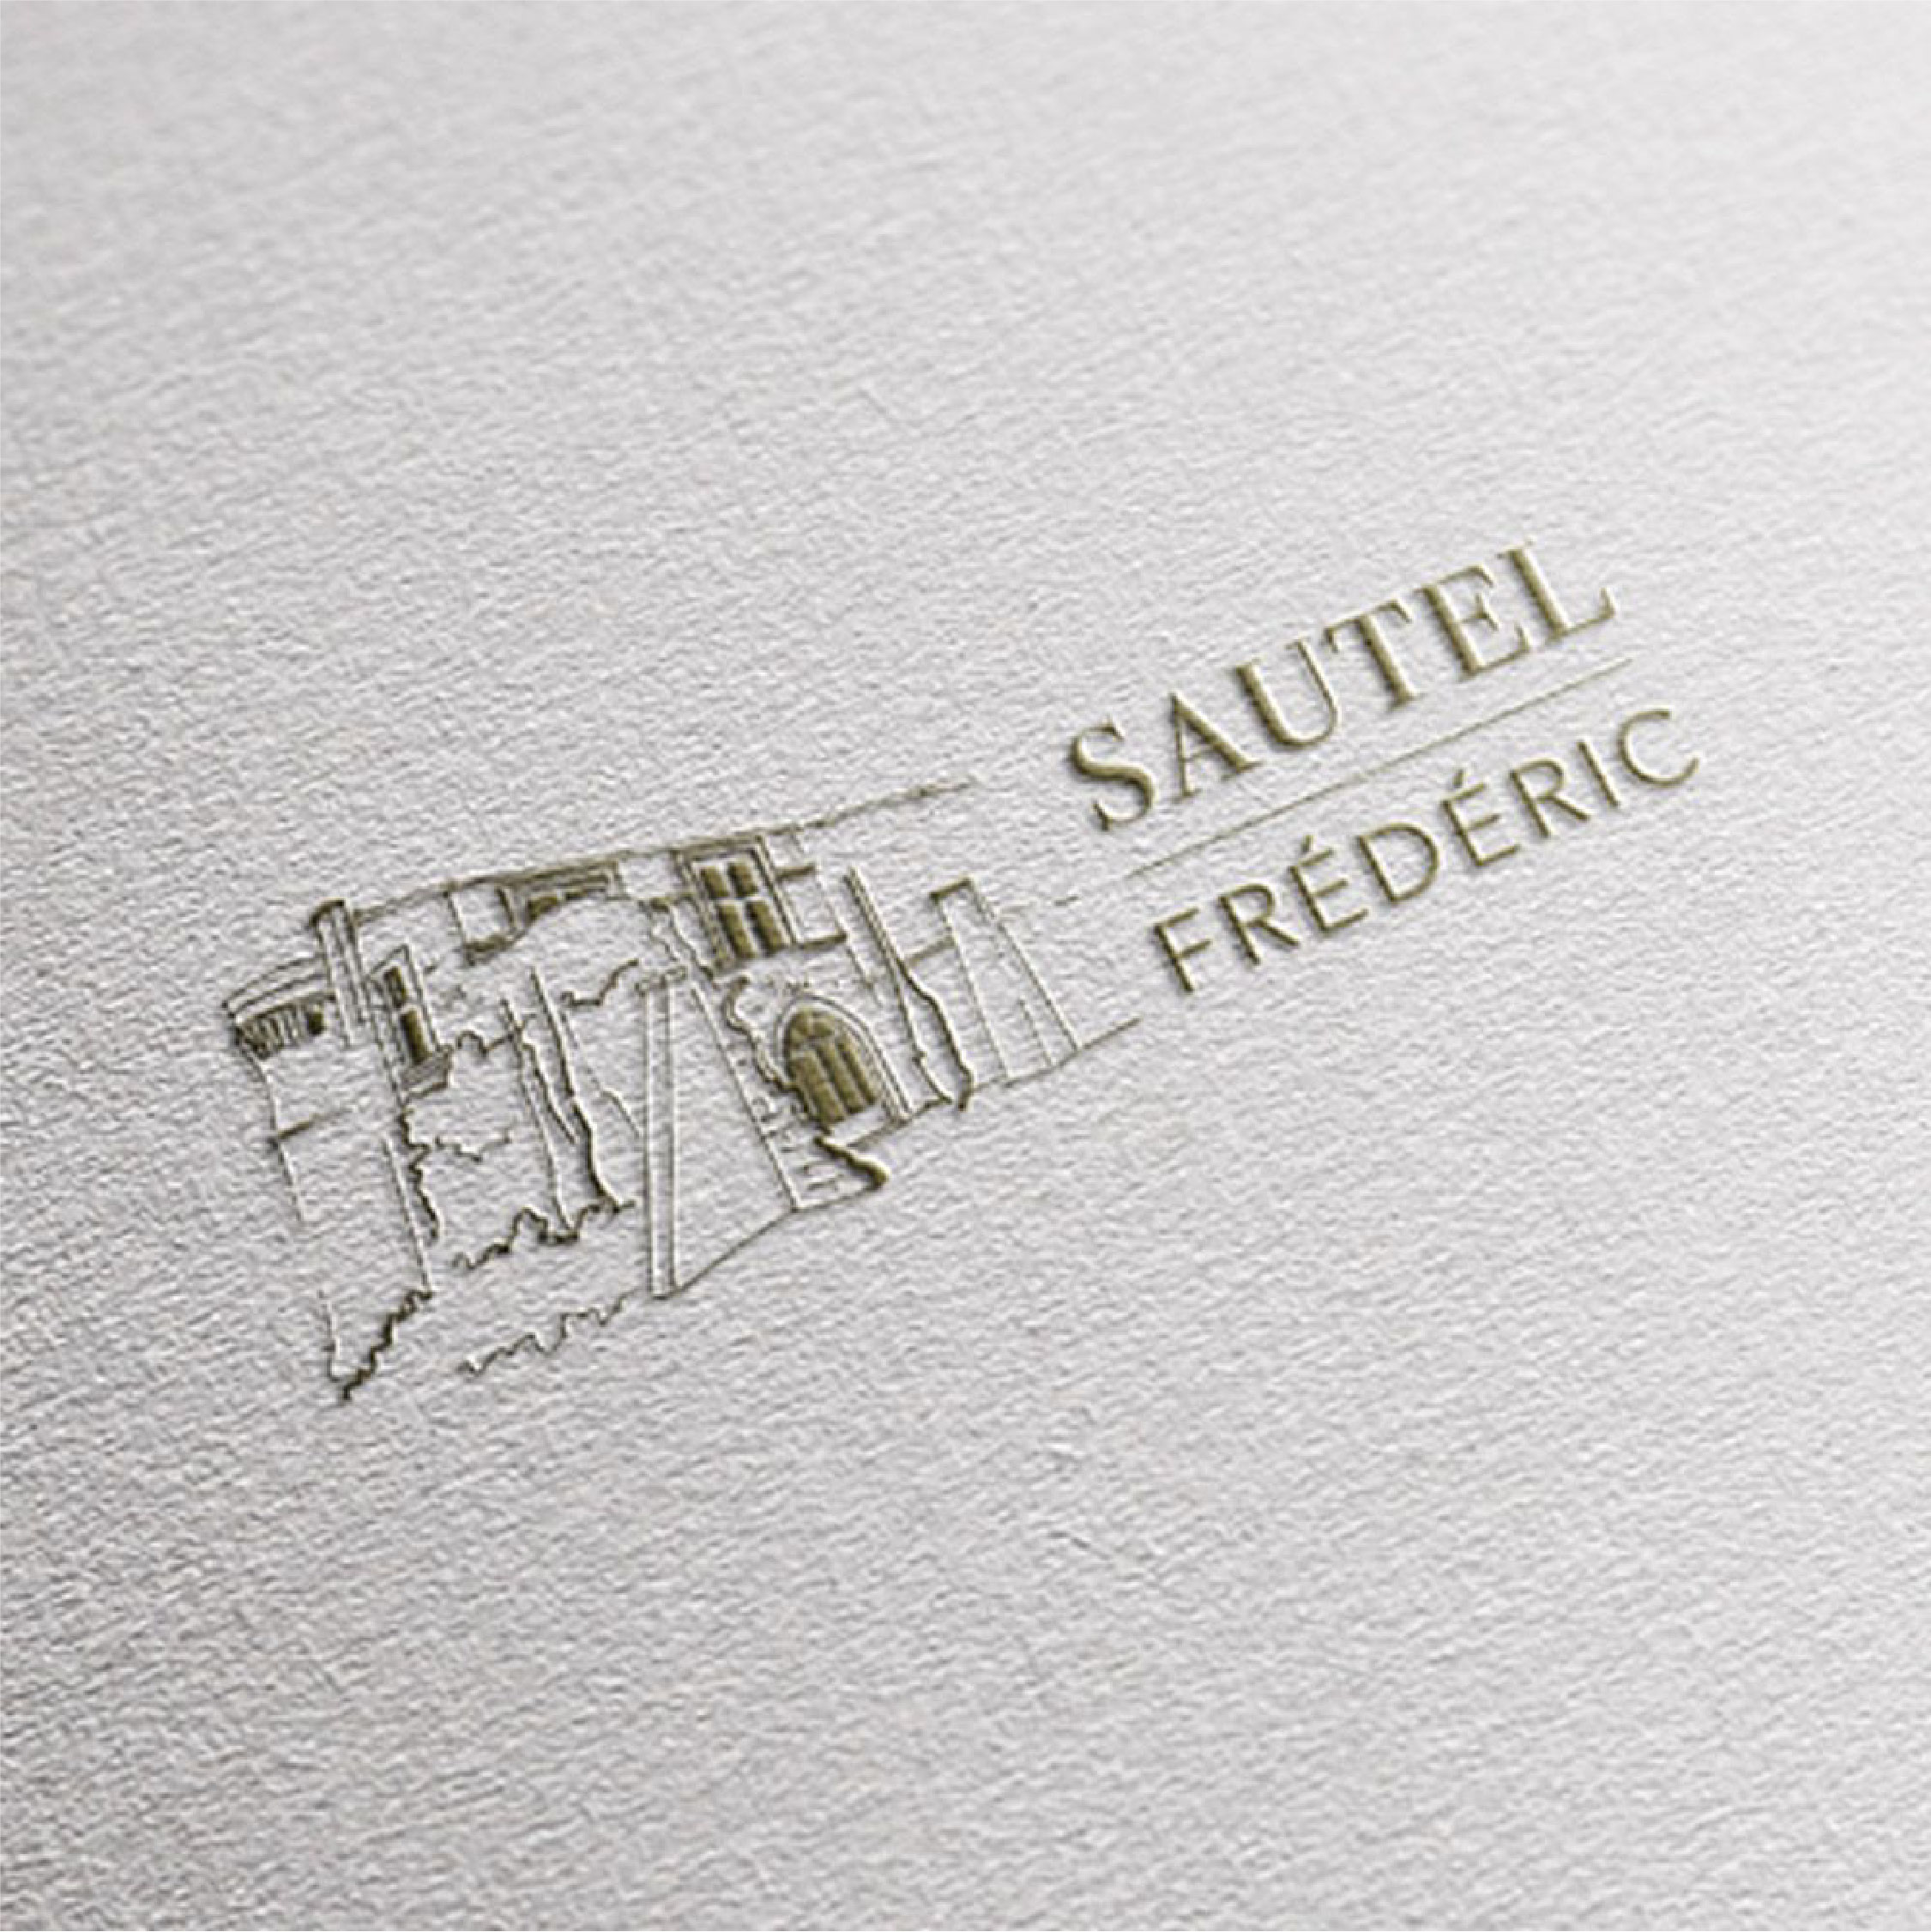 Frederic Sautel